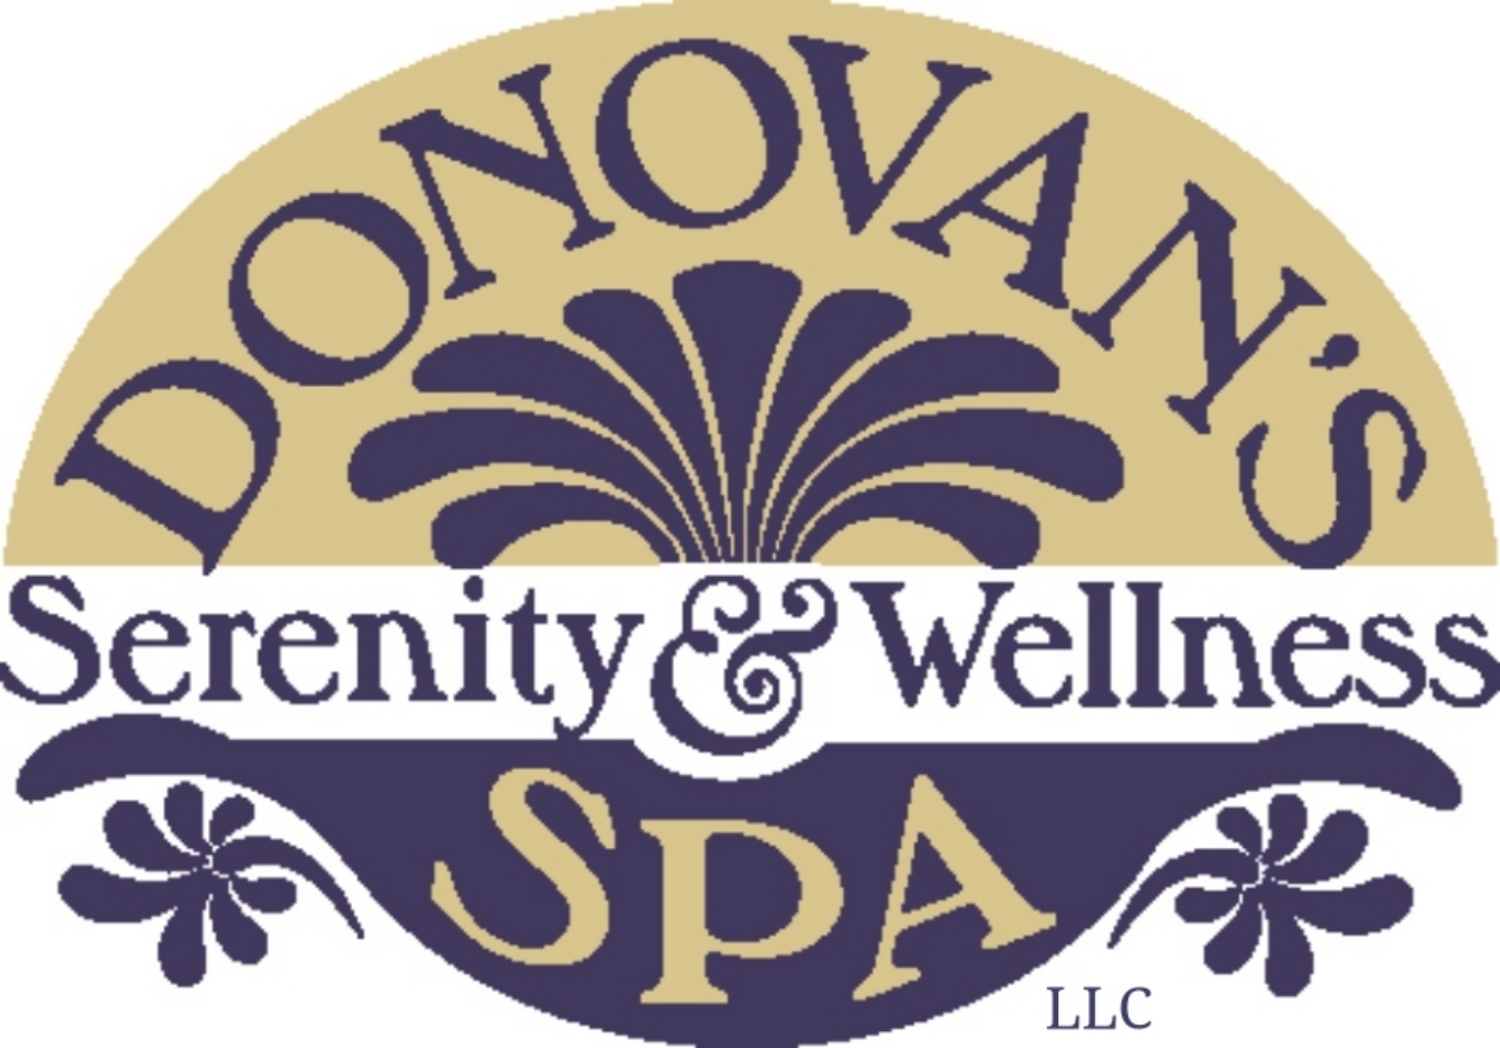 Donovan's Serenity & Wellness Spa, LLC